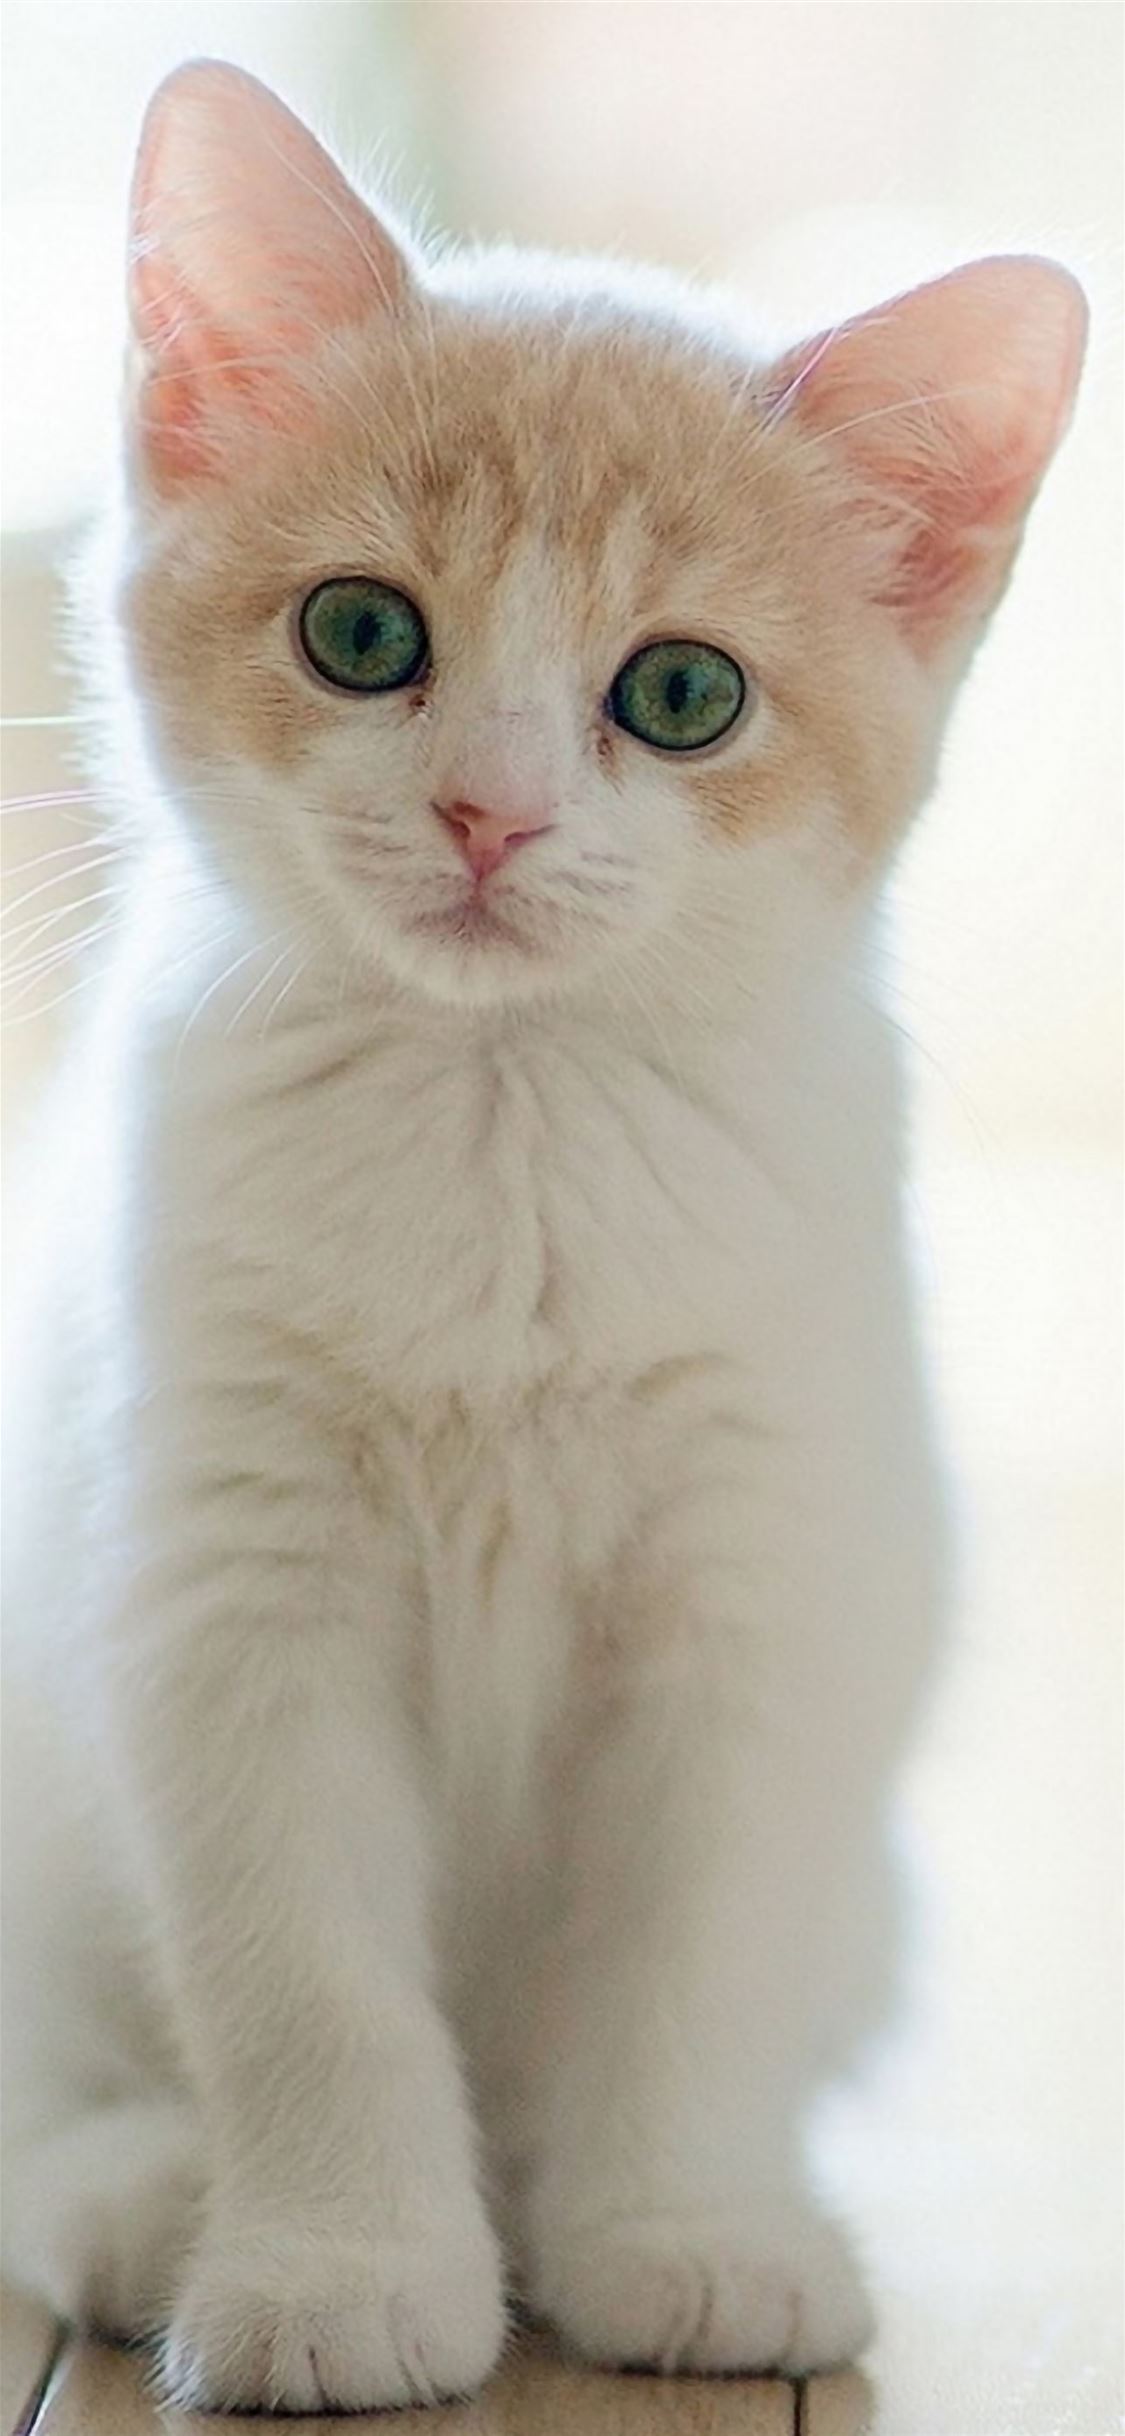 Cute Lovely Staring Kitten Cat iPhone Wallpaper Free Download